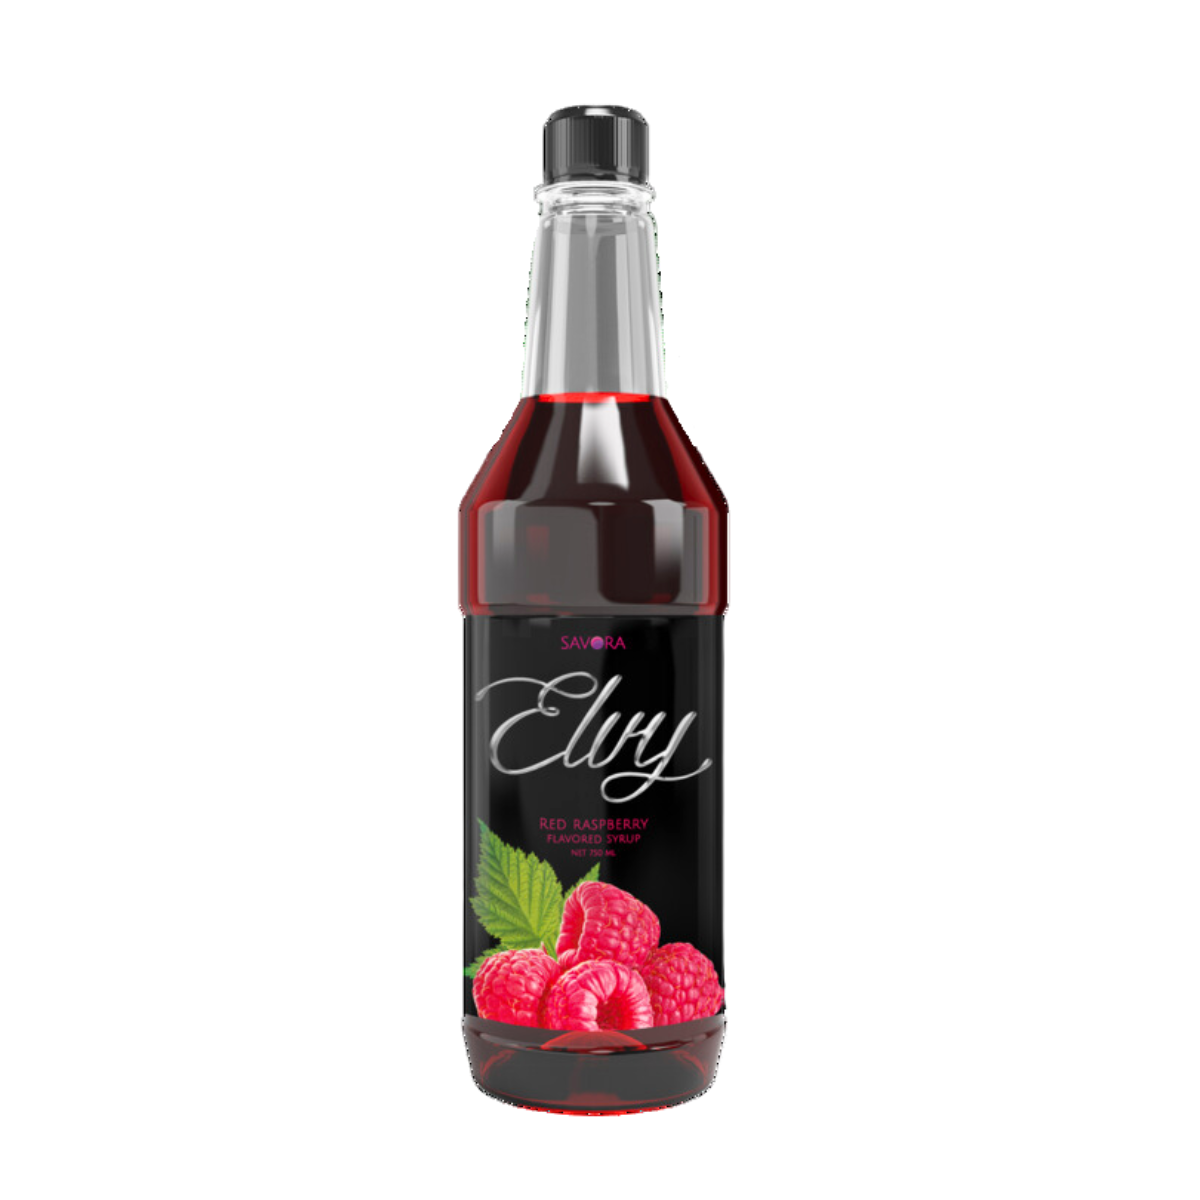 Savora Elvy Red Raspberry Flavour Syrup 750ml